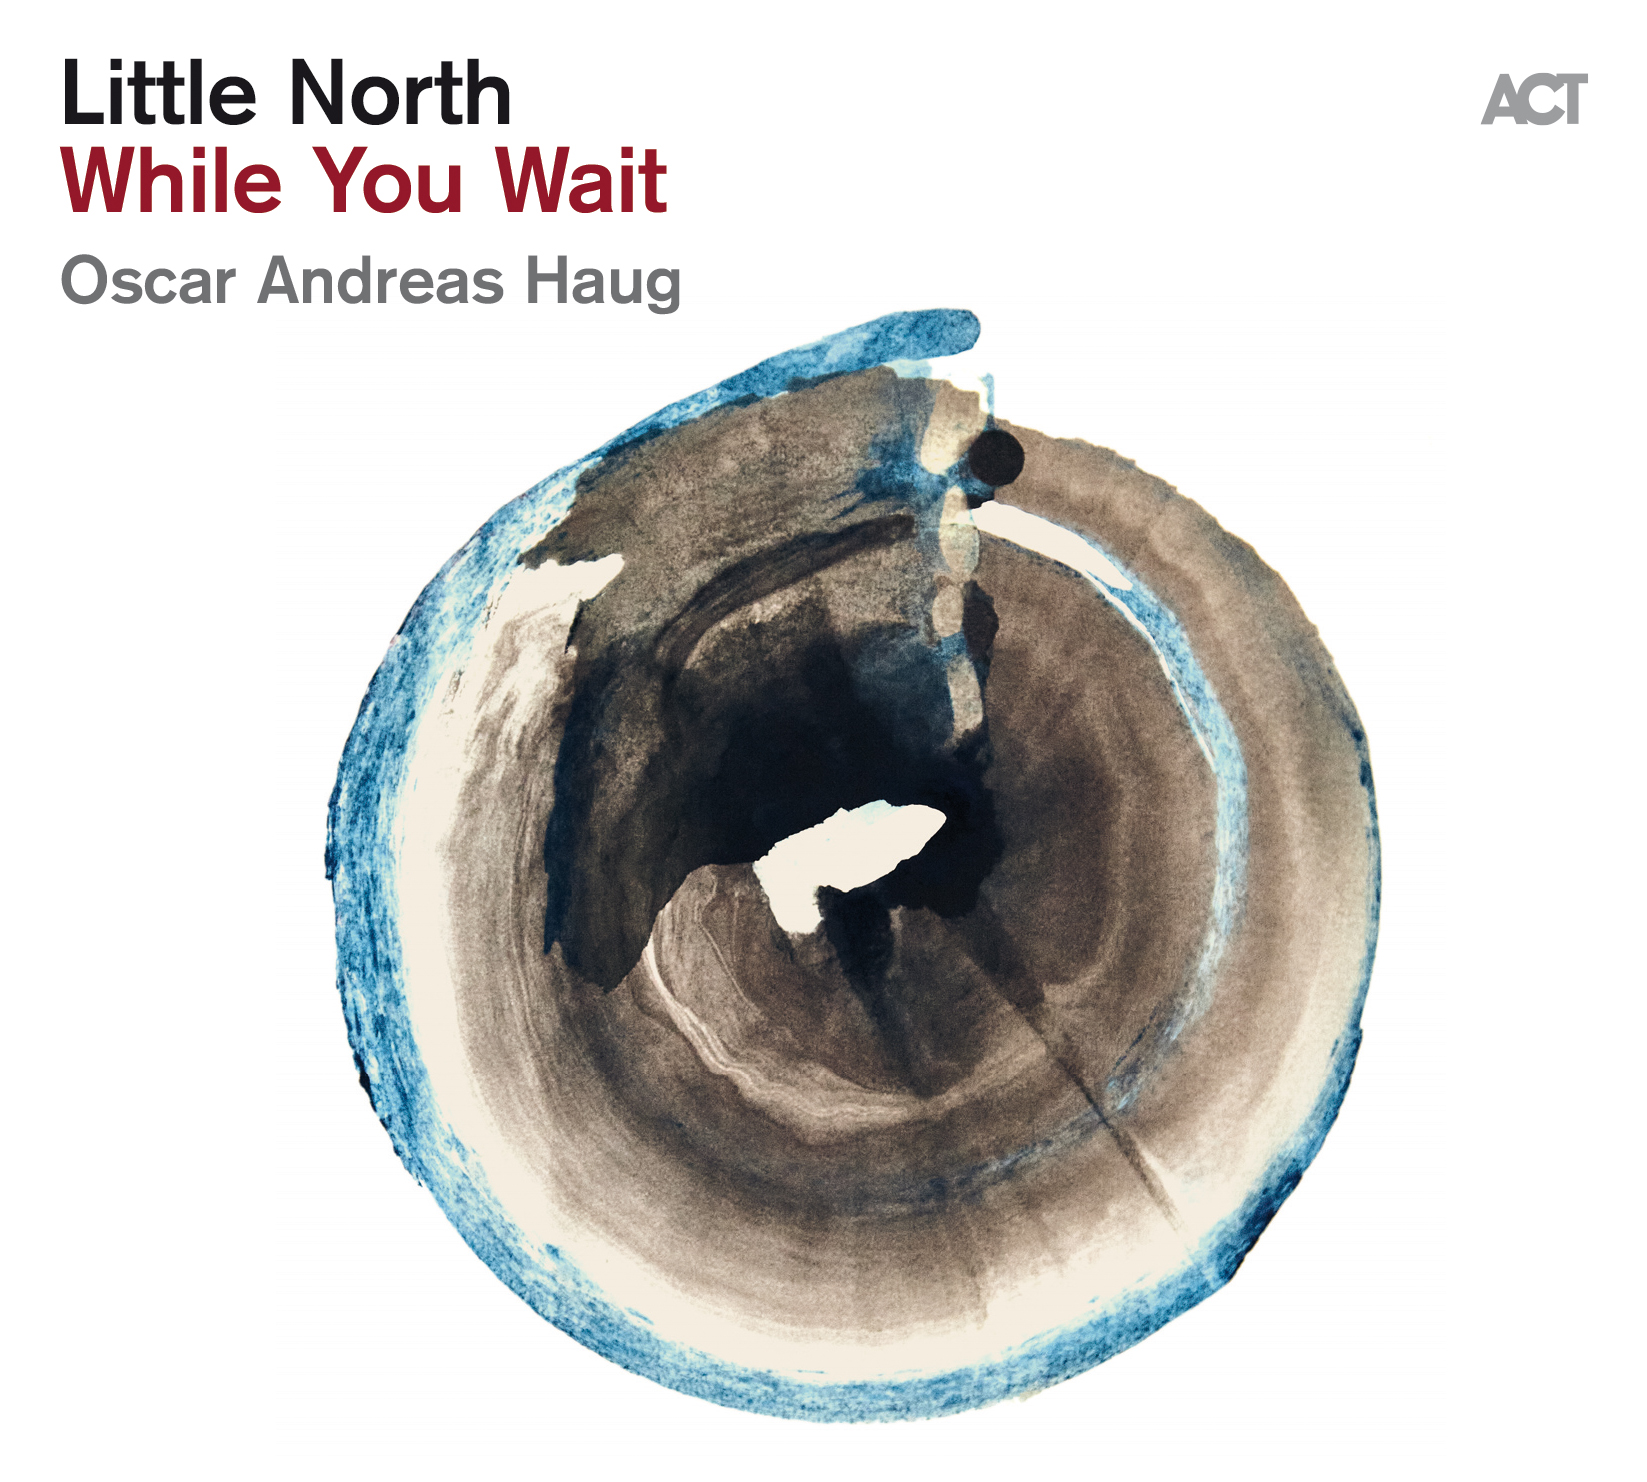 #
„While you wait“ von Little North: Qualitativer Quantensprung